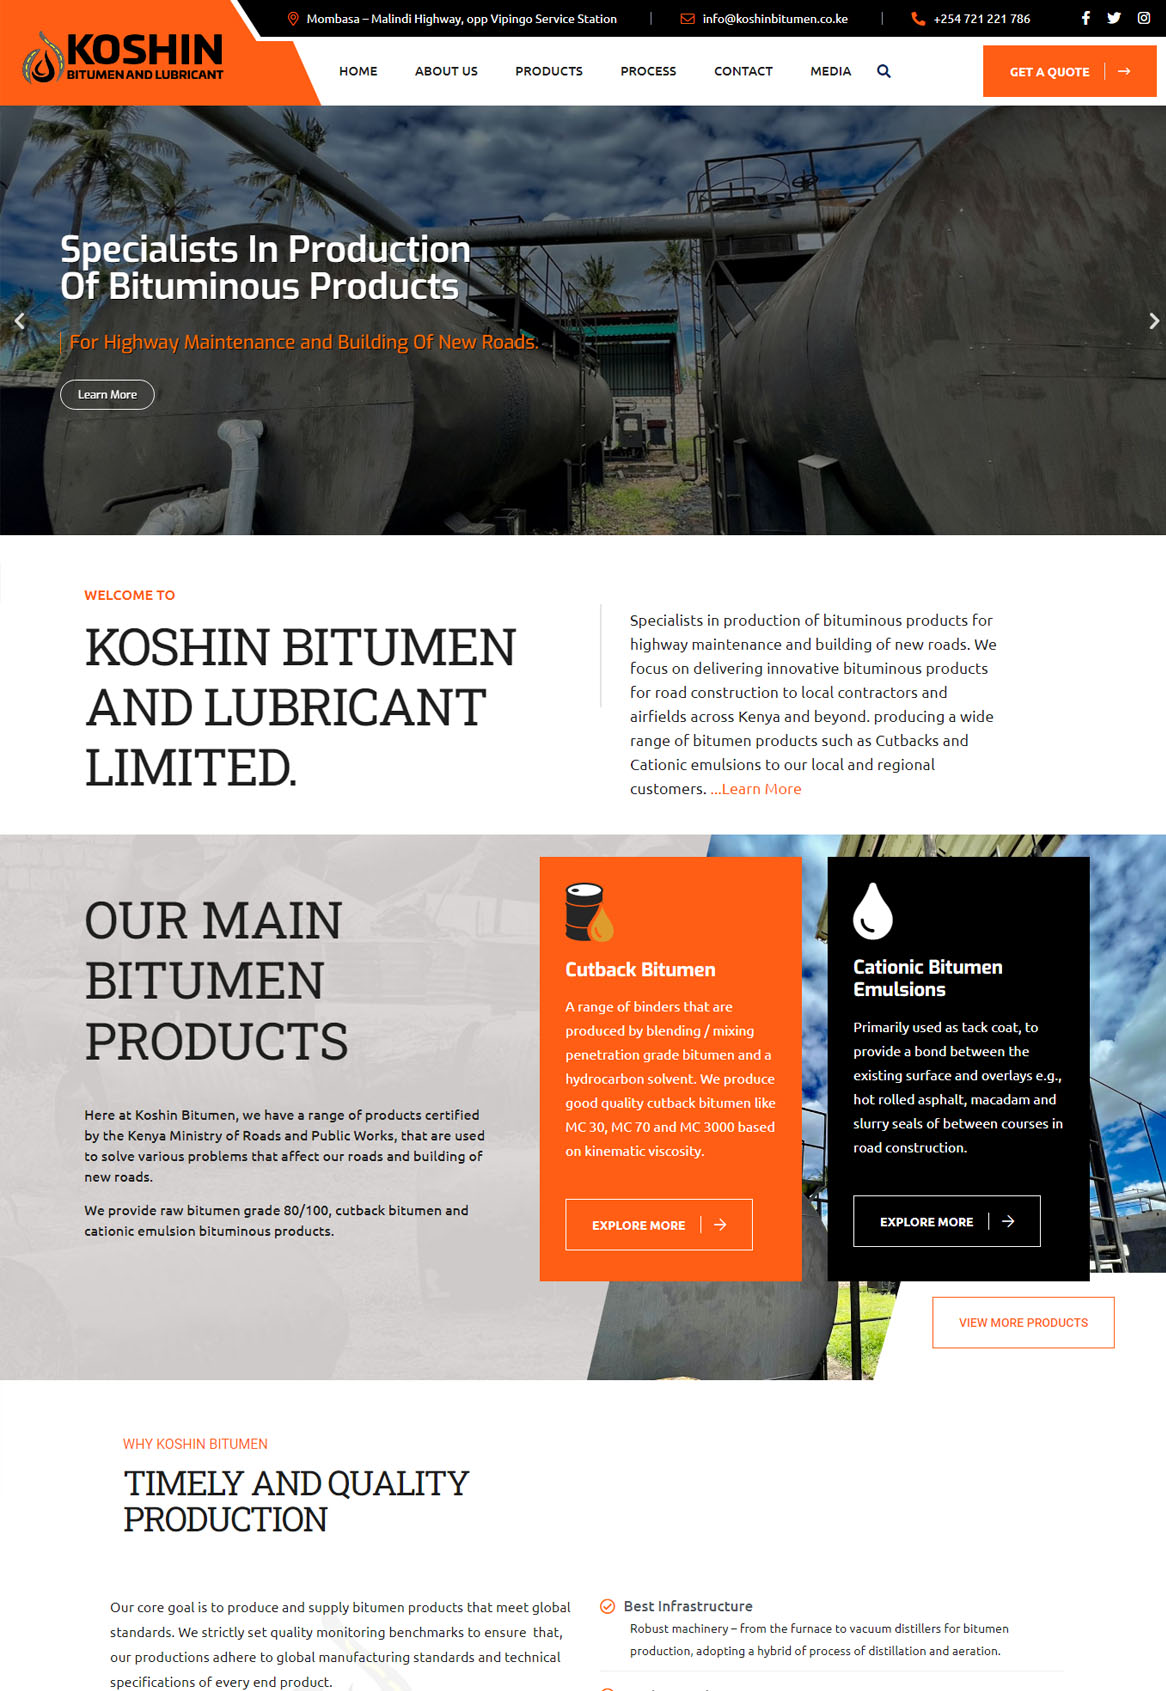 Koshin Bitumen and Lubricant Ltd